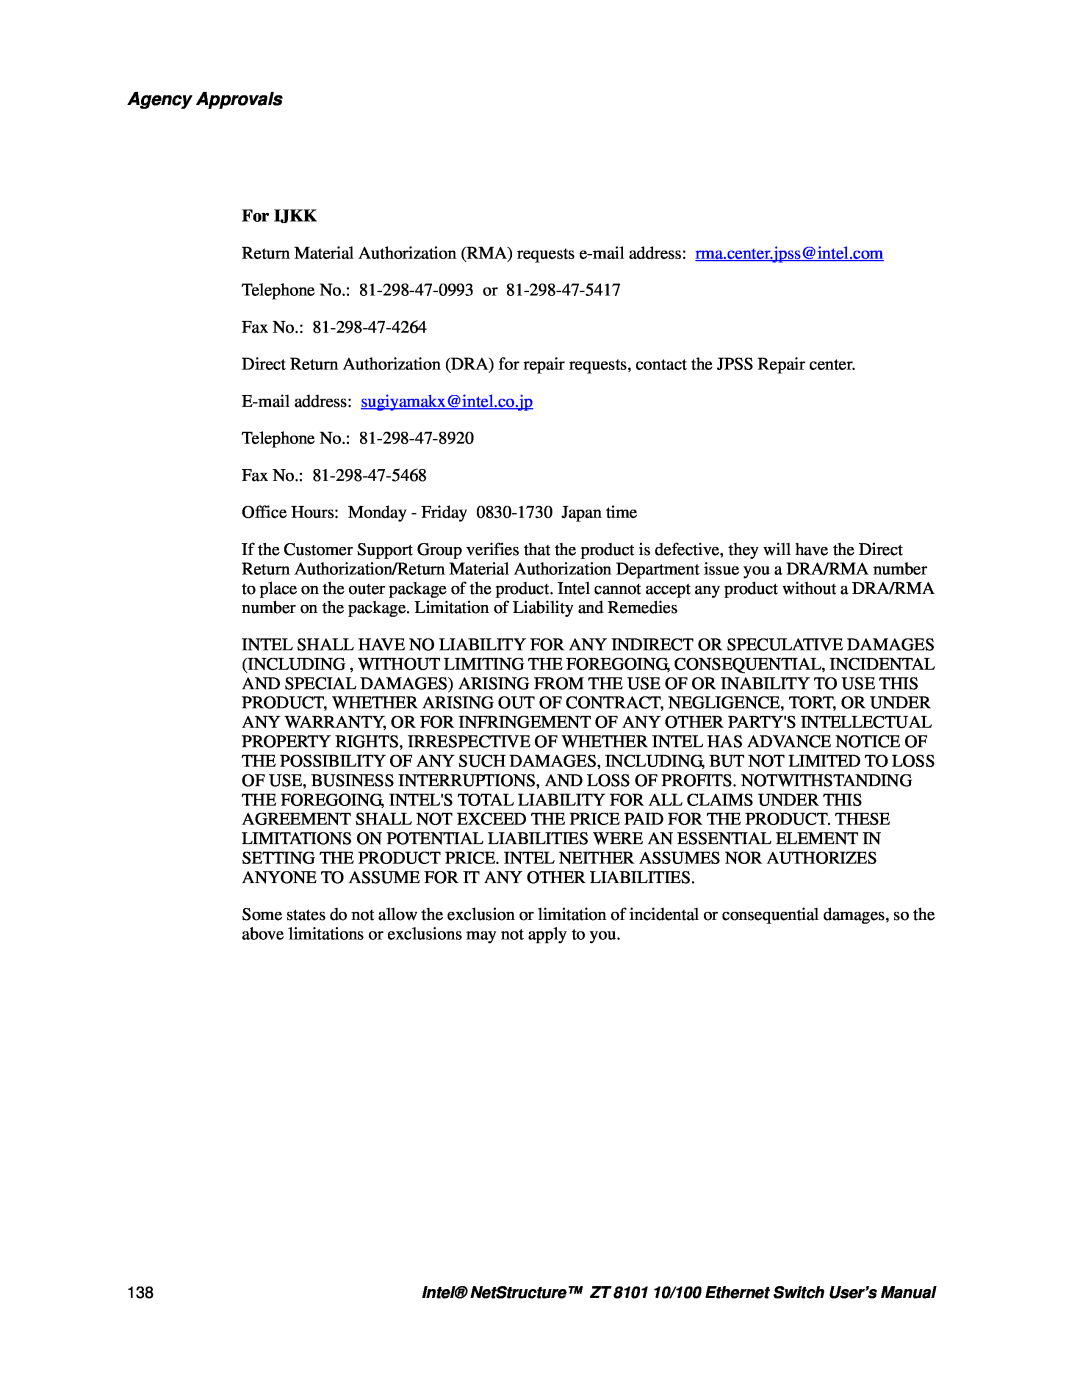 Intel ZT 8101 10/100 user manual E-mailaddress: sugiyamakx@intel.co.jp, Agency Approvals, For IJKK 